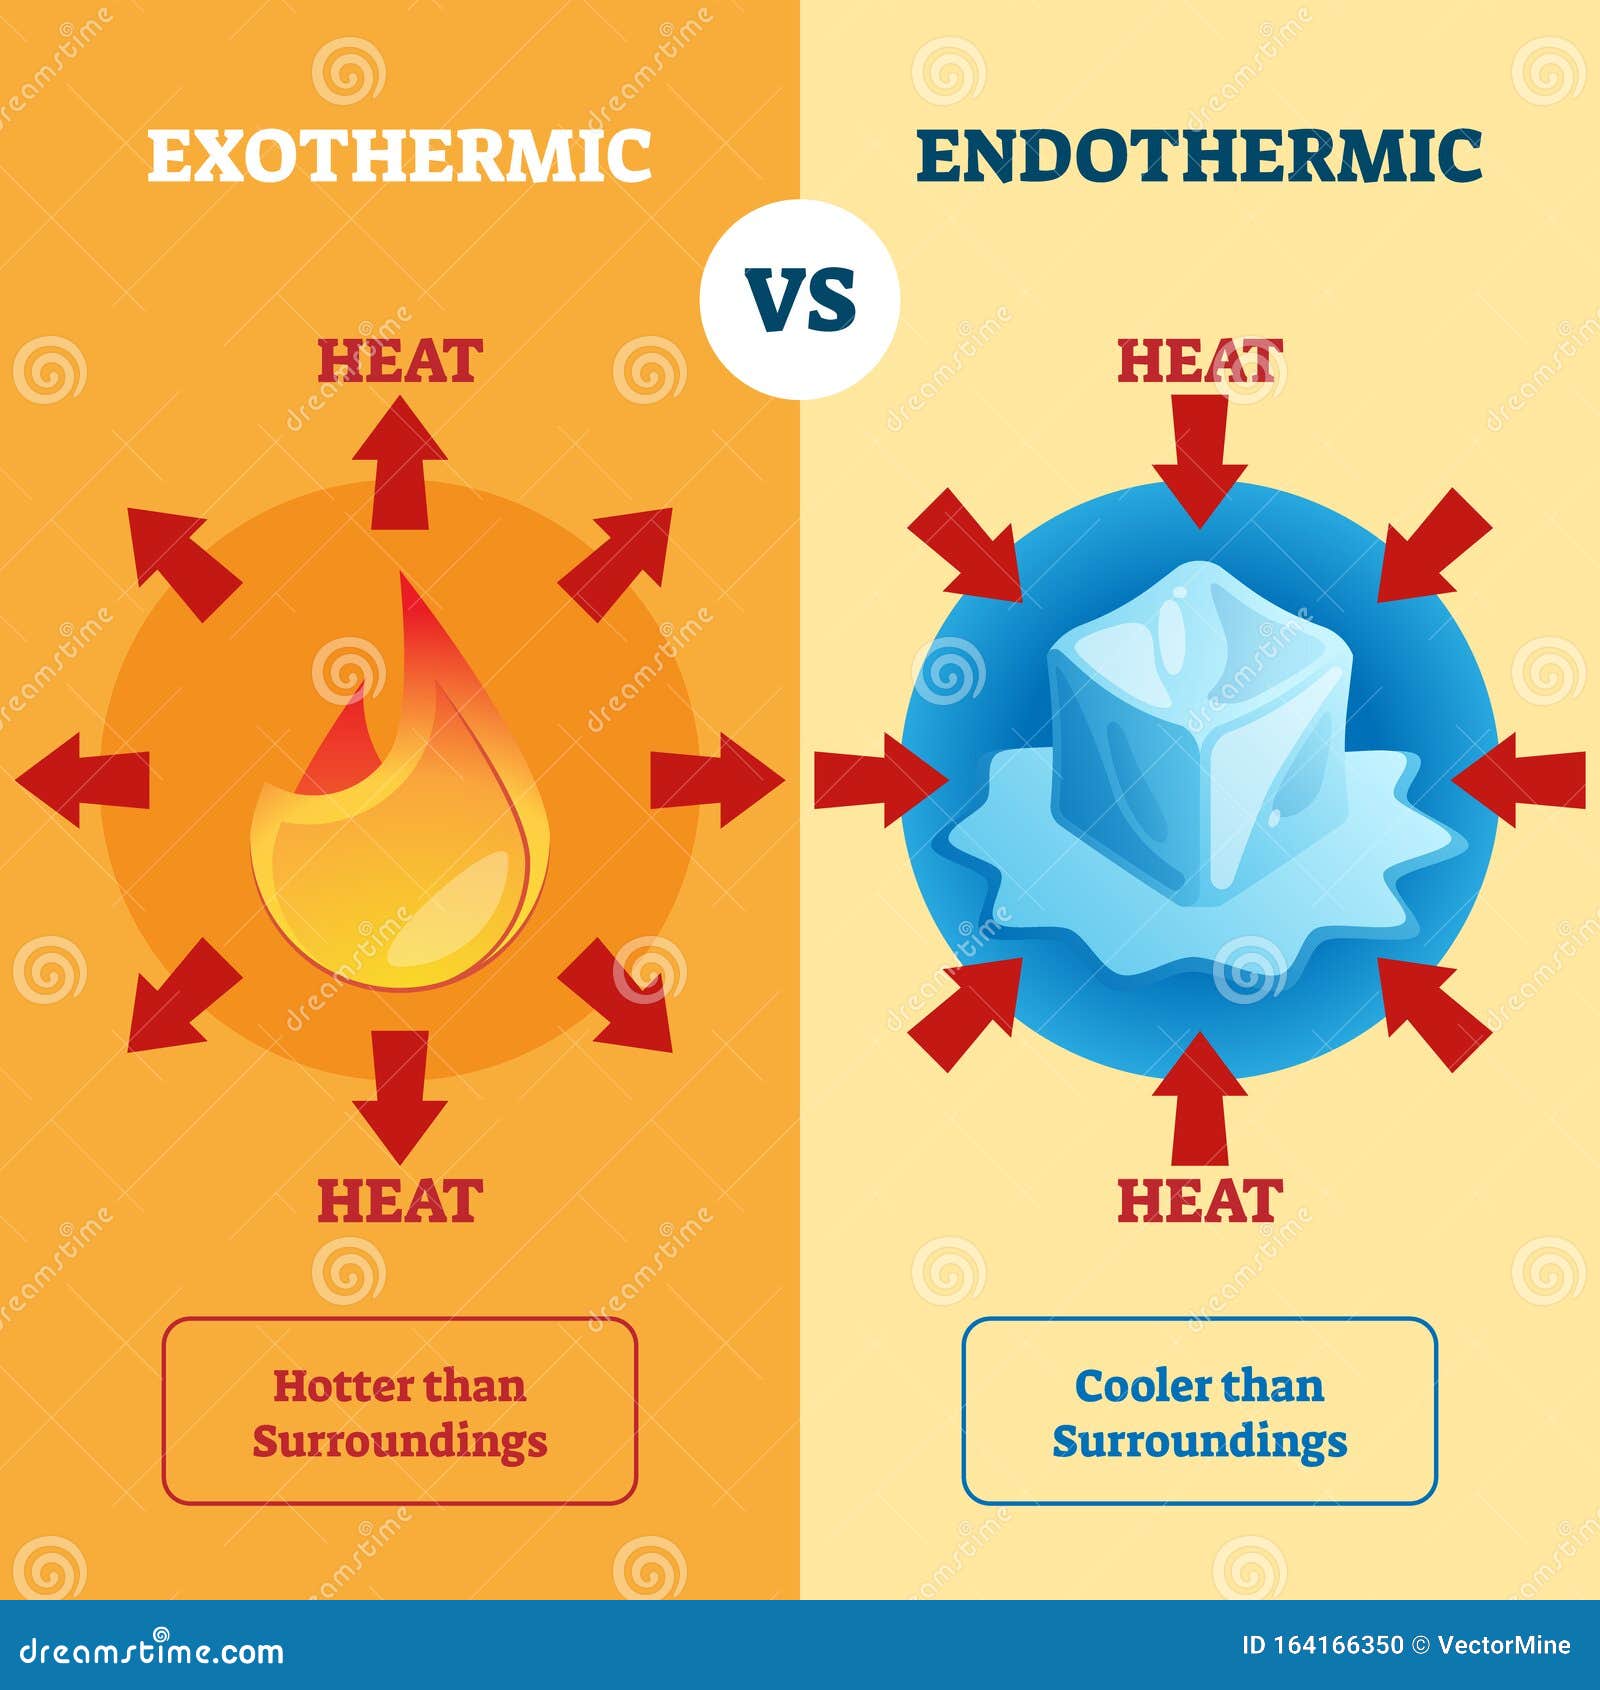 Exothermic Vs Endothermic Diagram